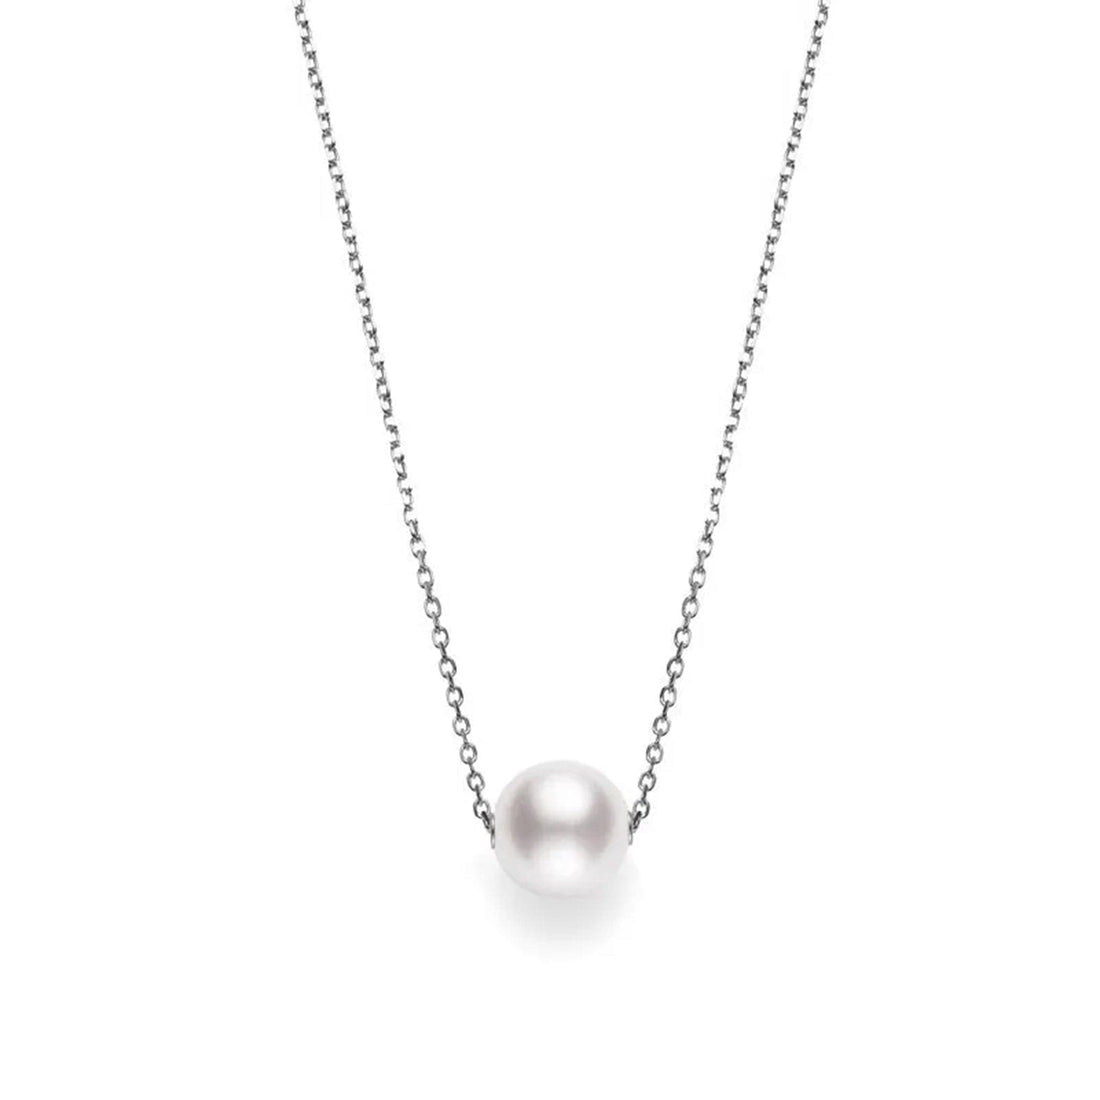 Mikimoto Pearl Pendant Necklace in 18k White Gold